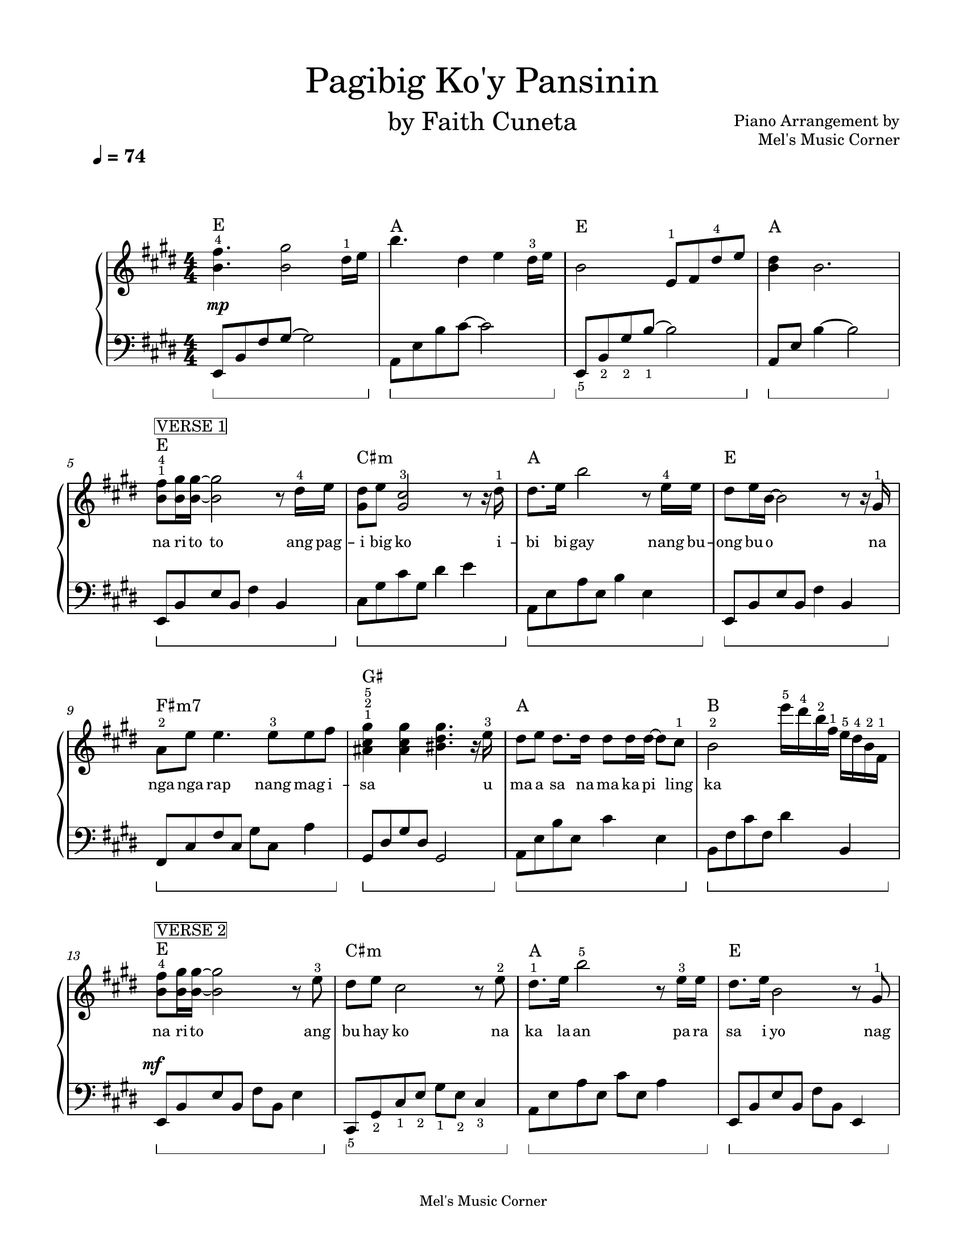 Faith Cuneta - Pag-ibig Ko'y Pansinin (piano sheet music) by Mel's Music Corner